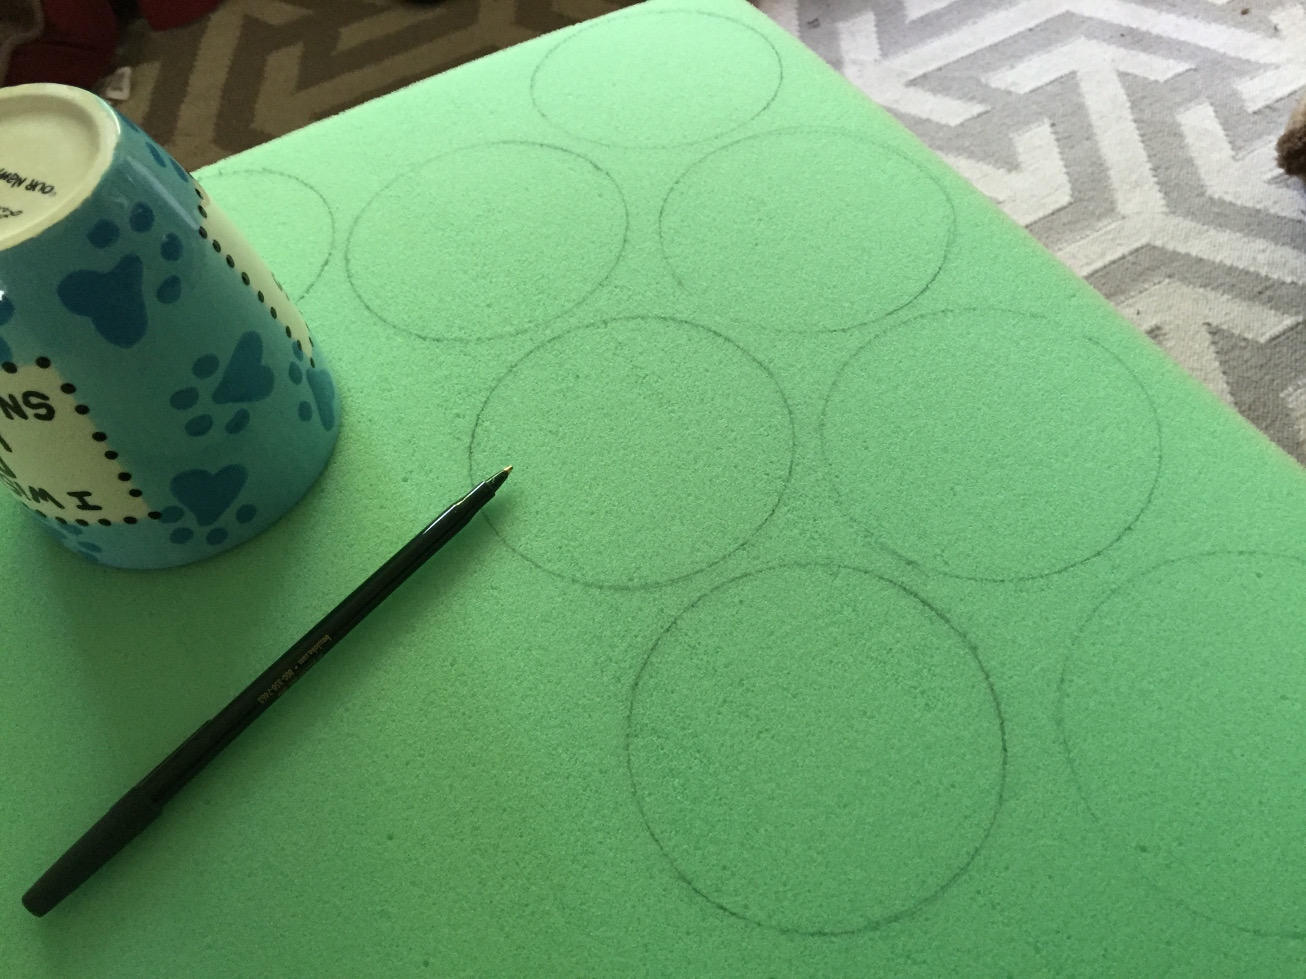 Tracing circles on foam